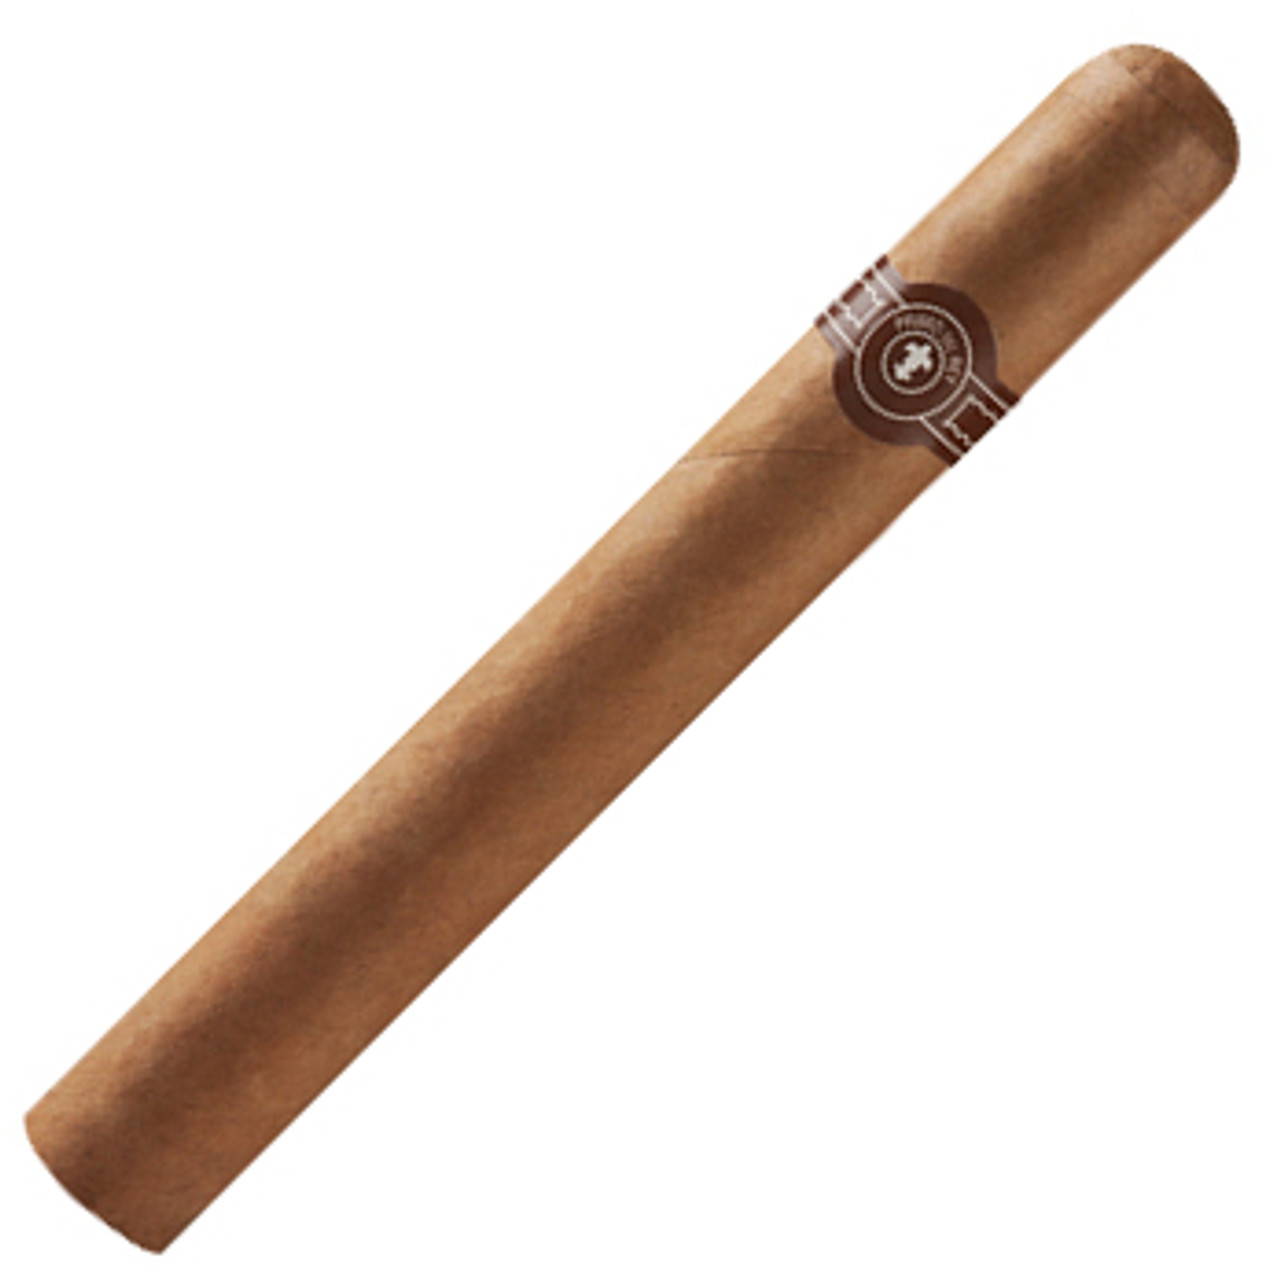 Primo del Rey Toro Cigars - 6 x 50 (Box of 15)